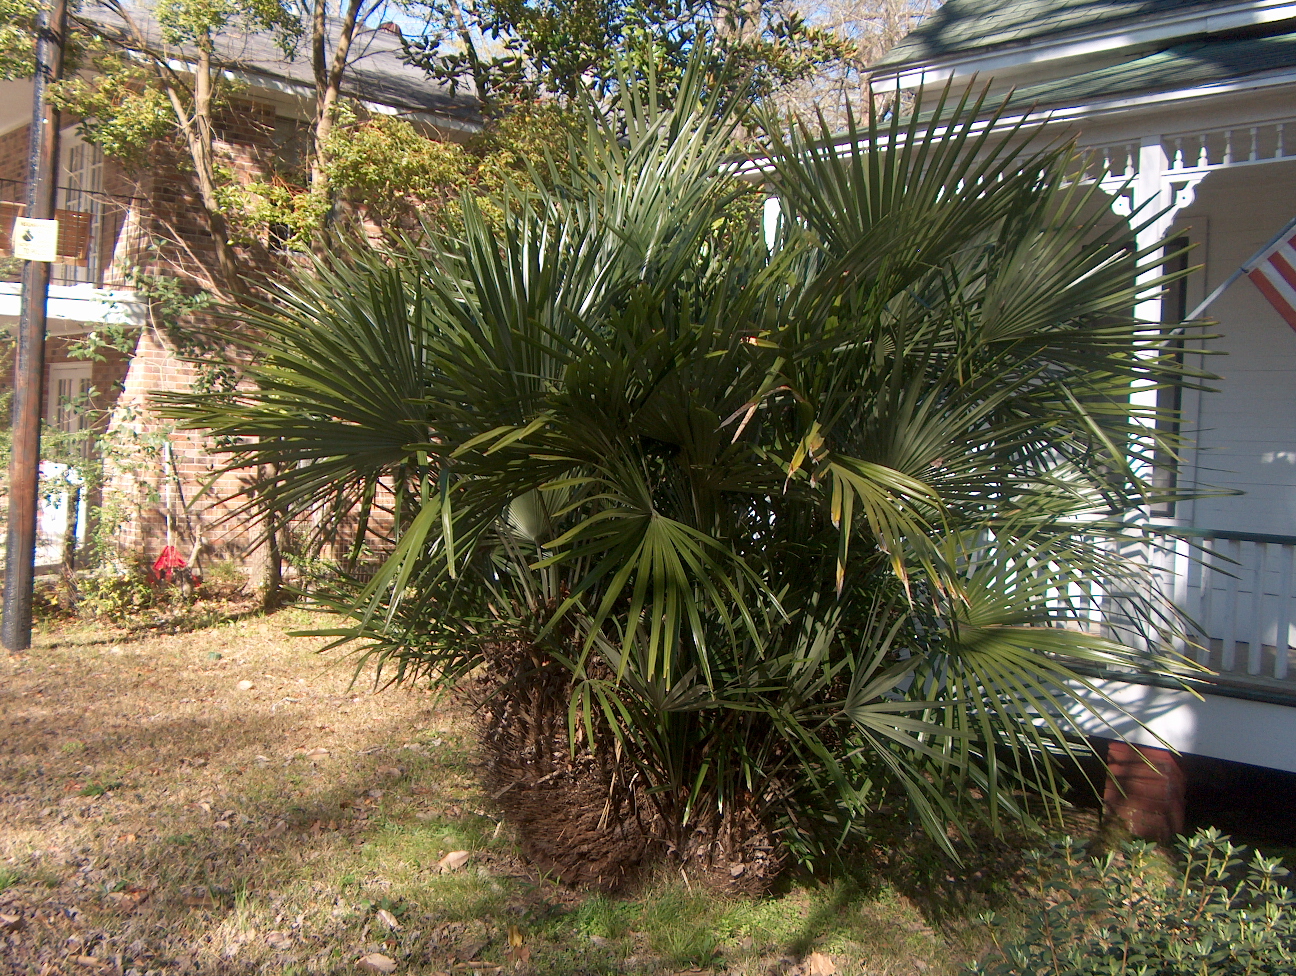 Rhapidophyllum hystrix / Needle Palm